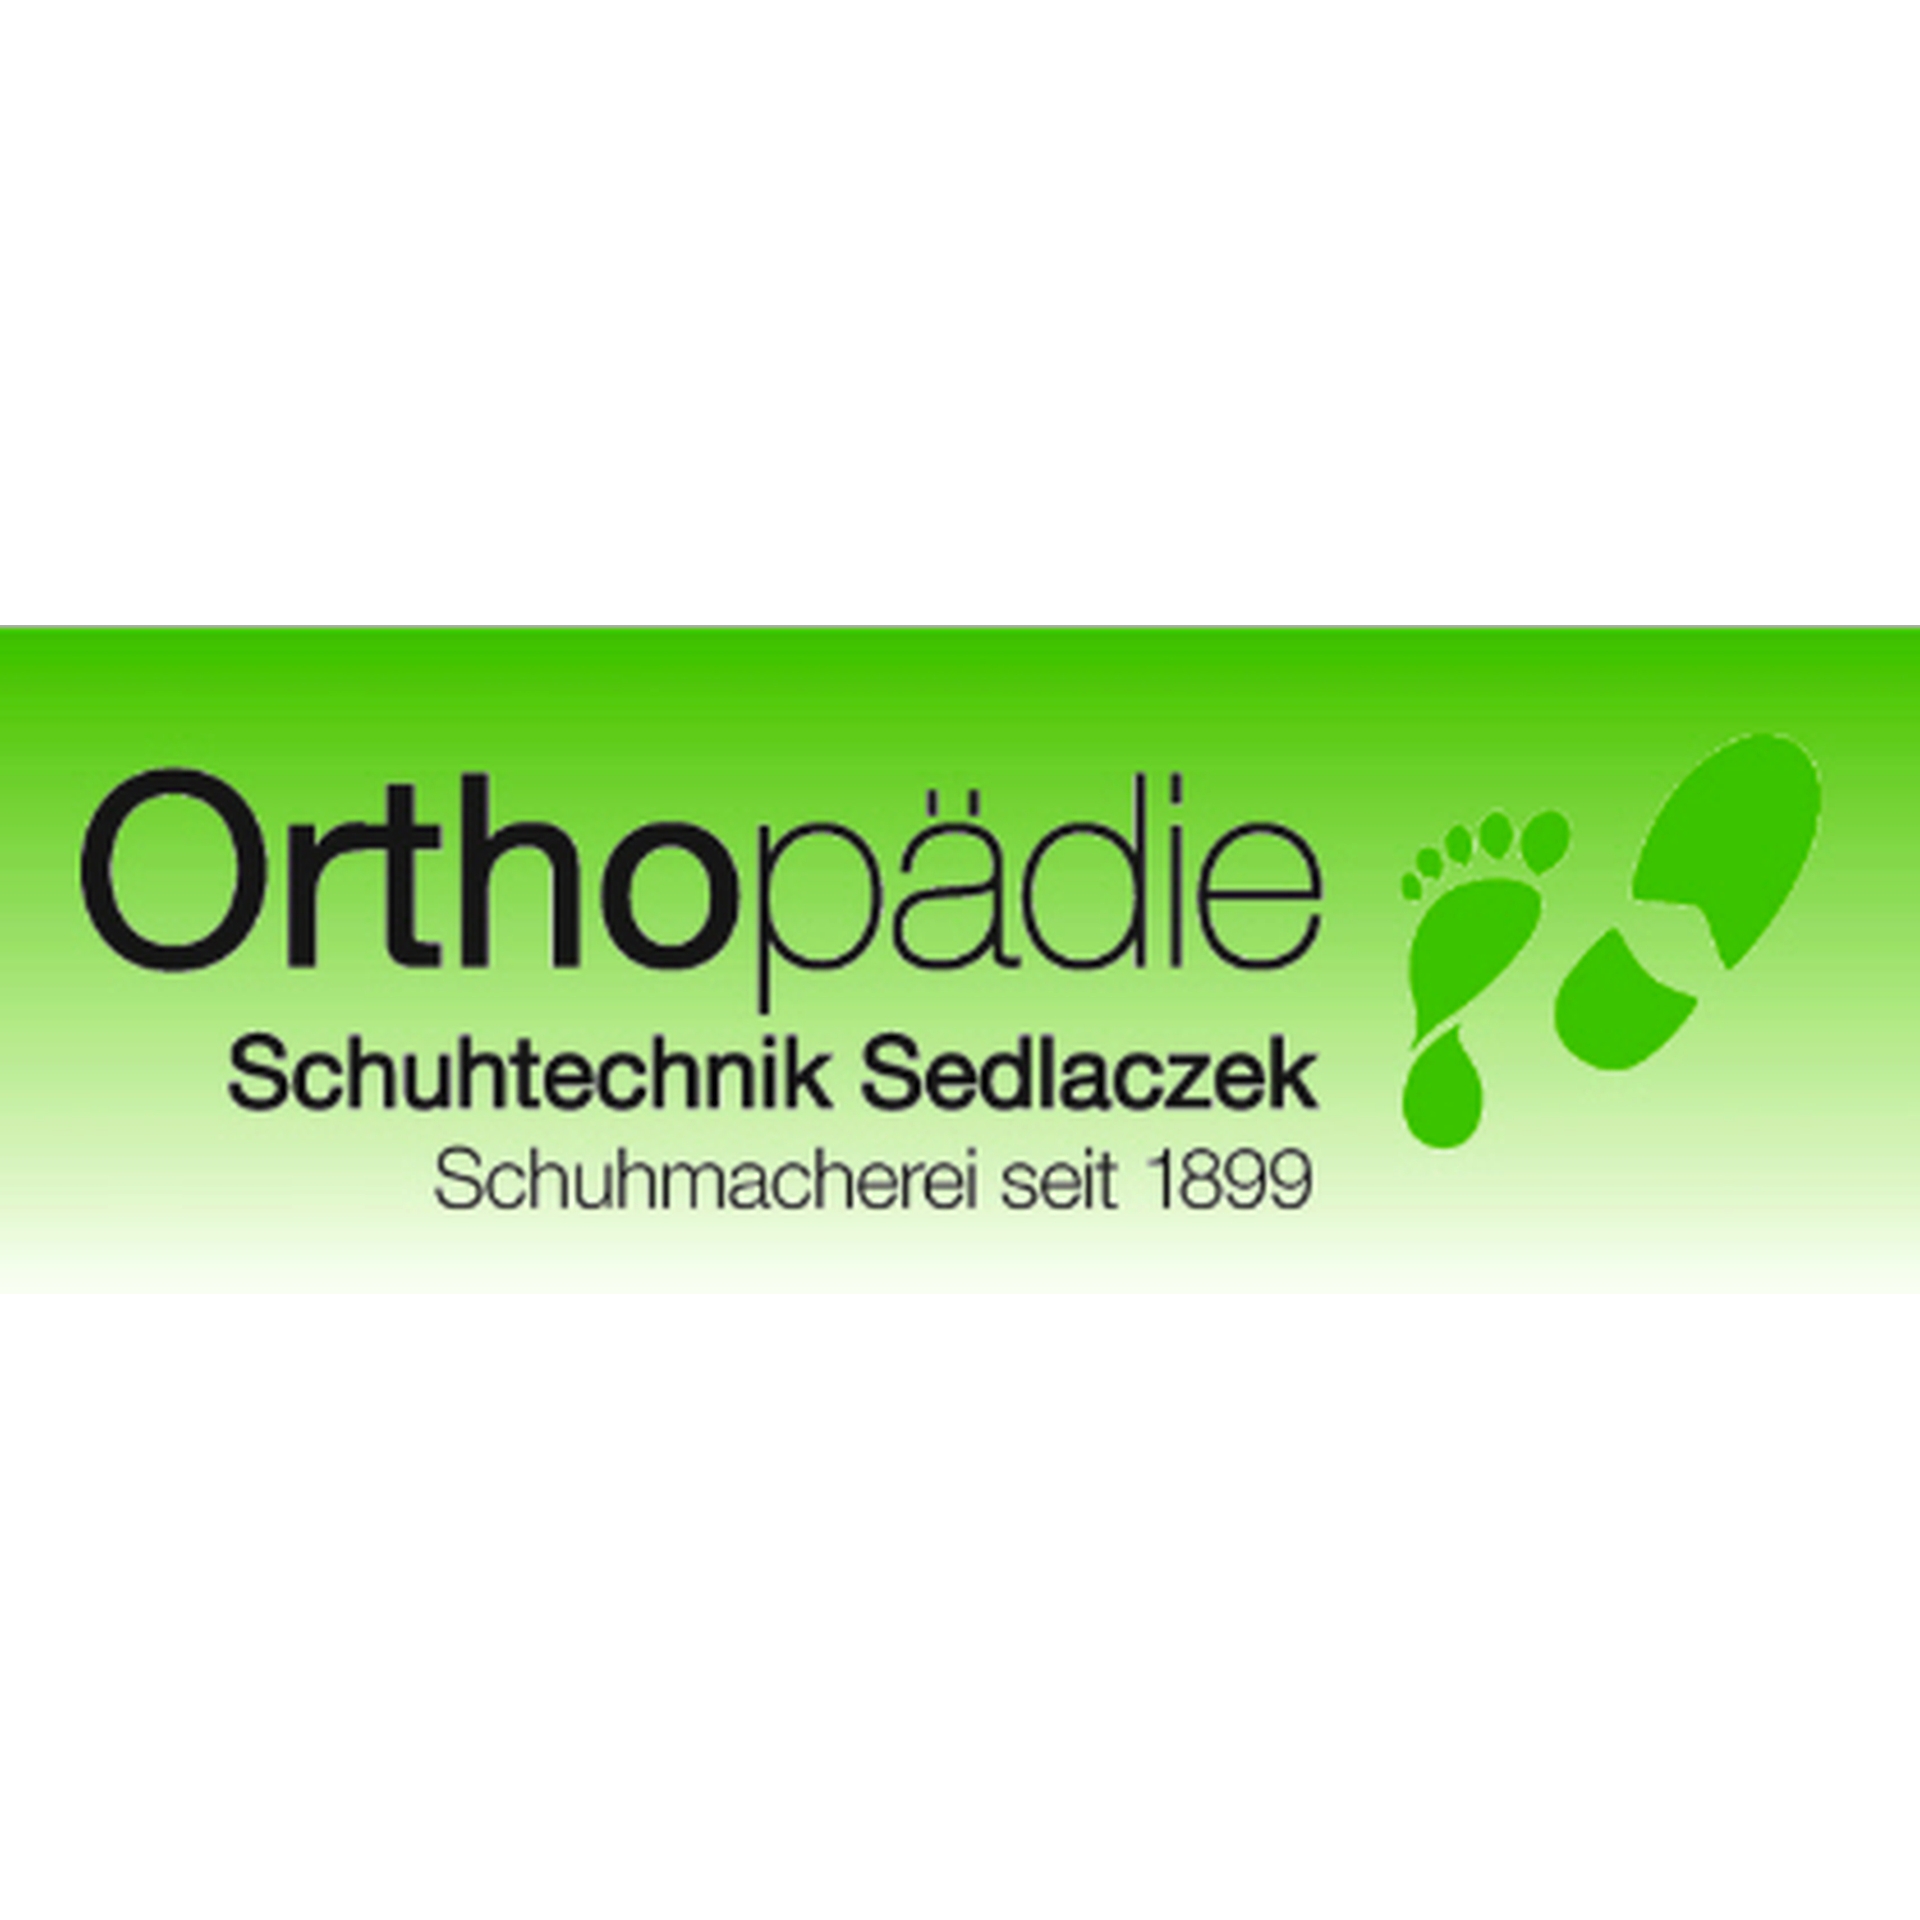 Orthopädieschuhtechnik Sedlaczek - Schuhmacherei seit 1899 in Trebsen Mulde - Logo